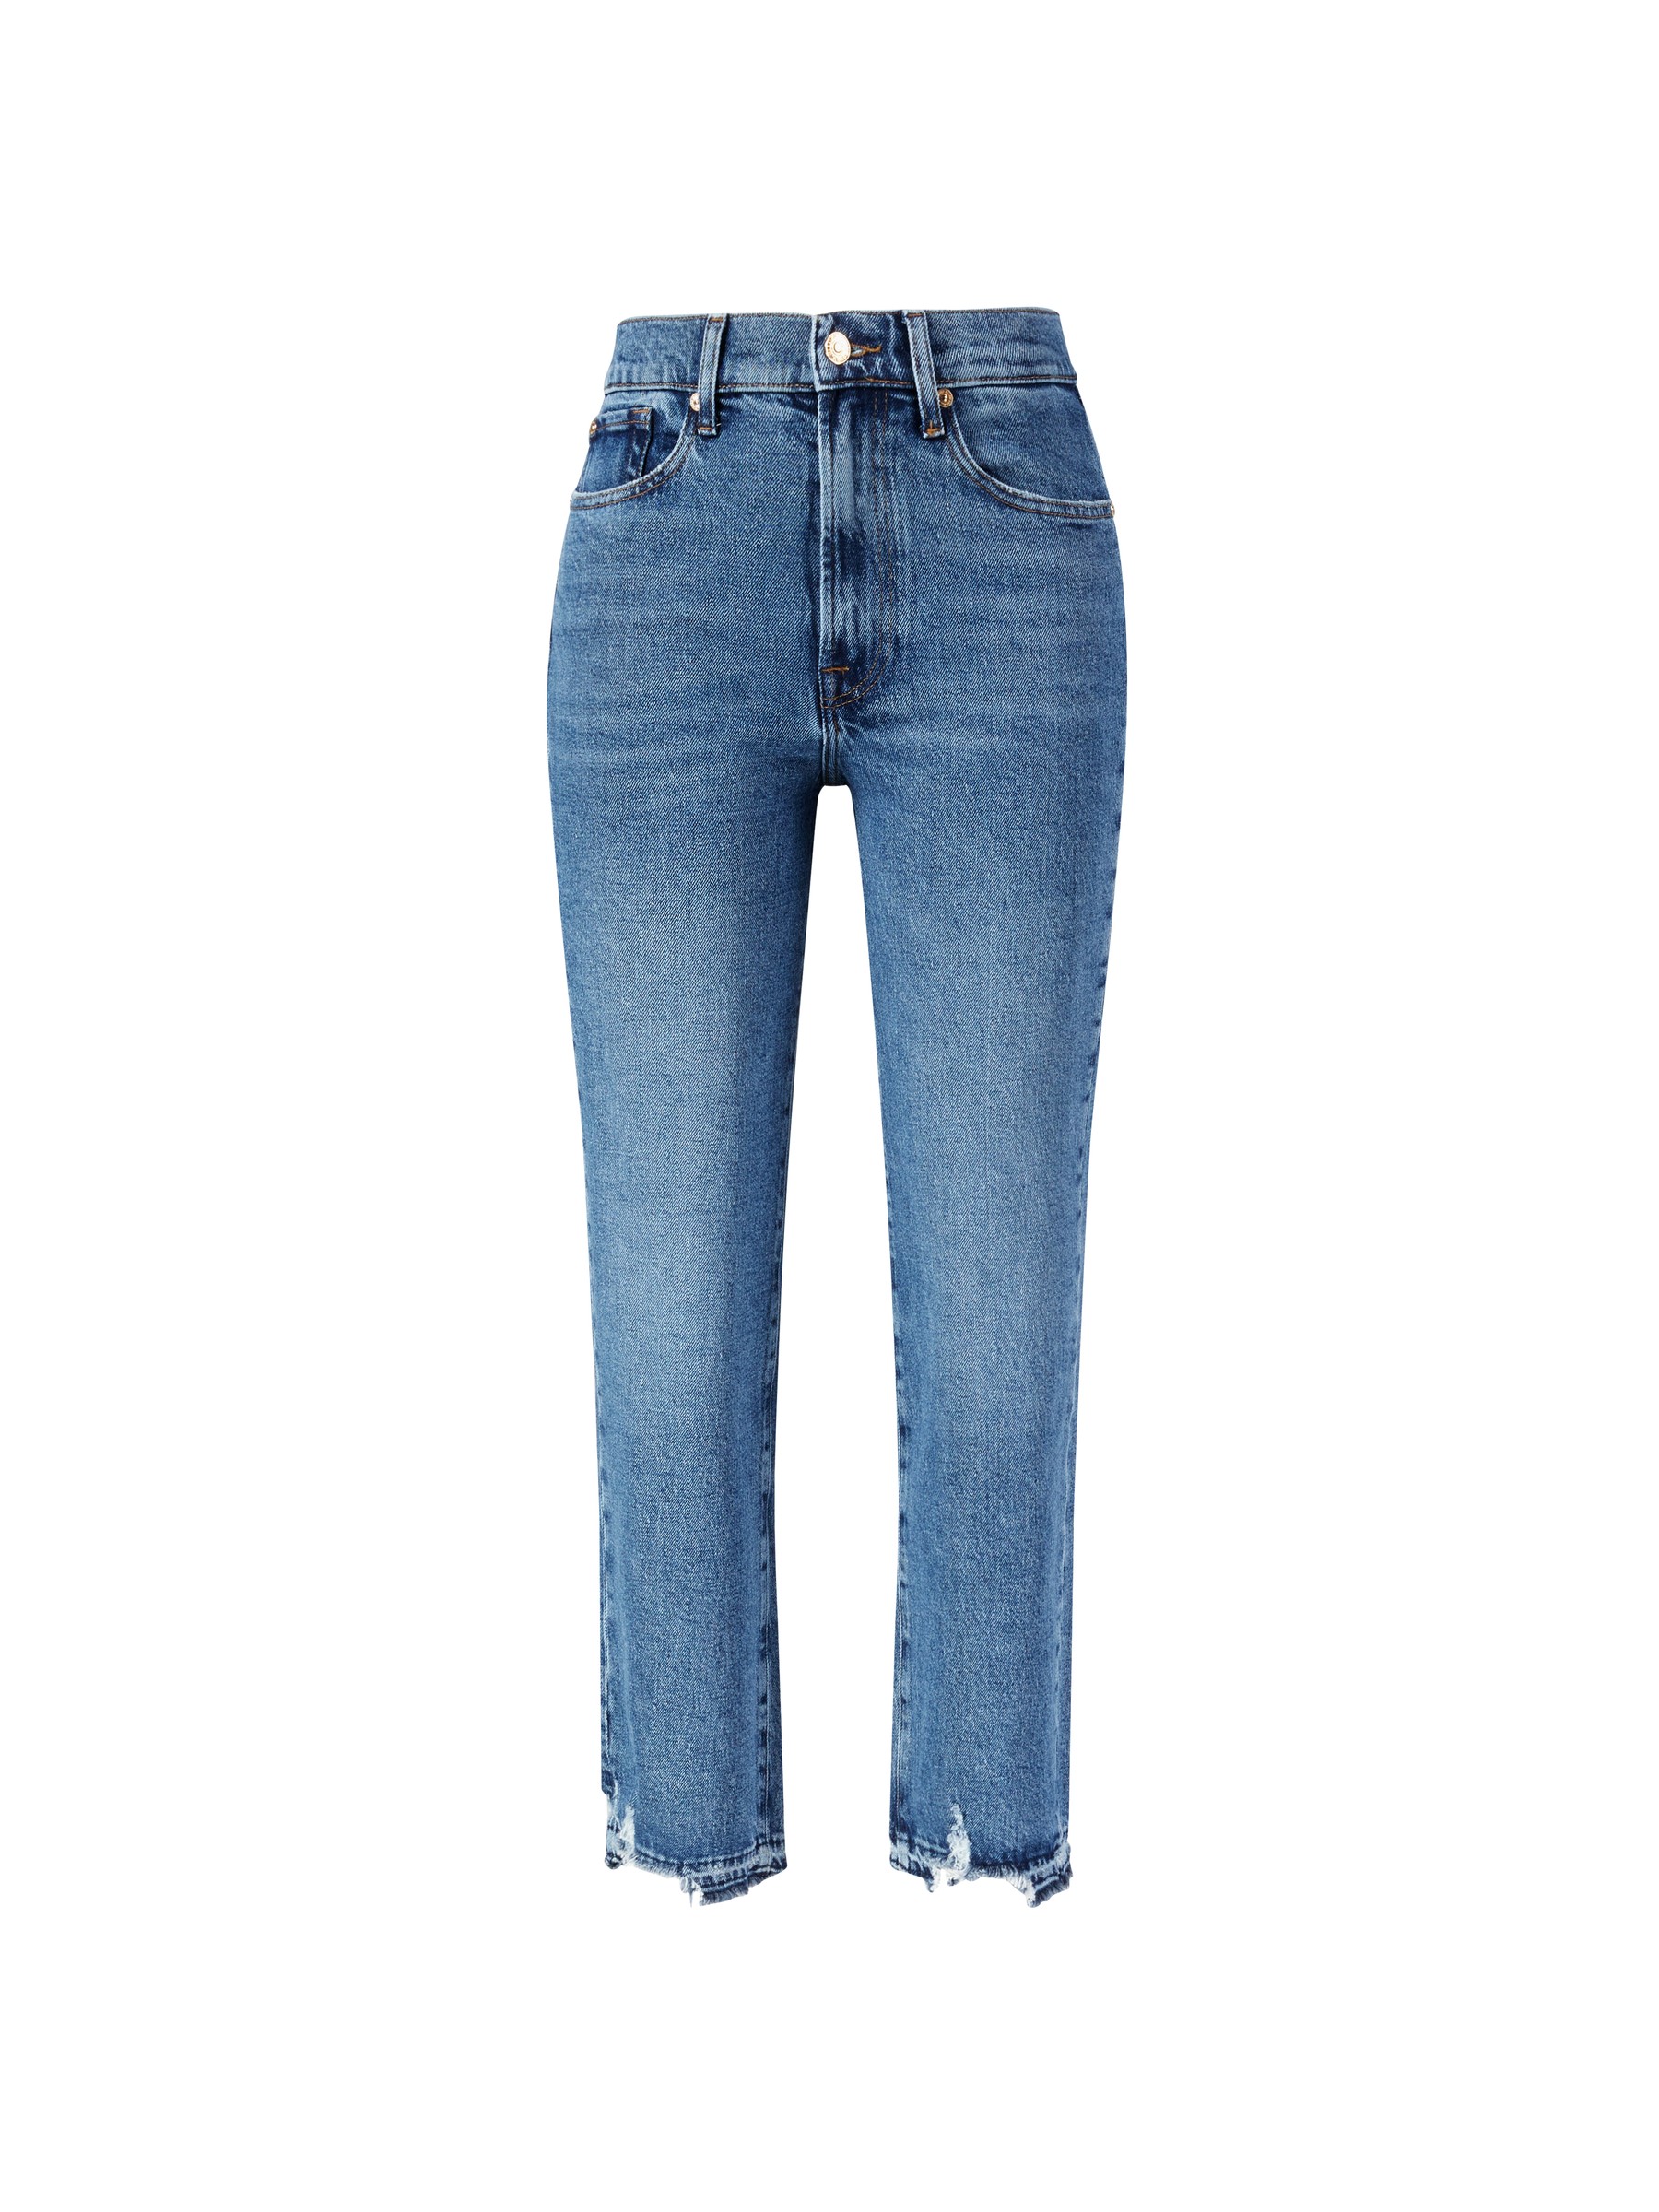 Cambio High Waist Jeans hellgrau Jeans-Optik Mode Jeans High Waist Jeans 